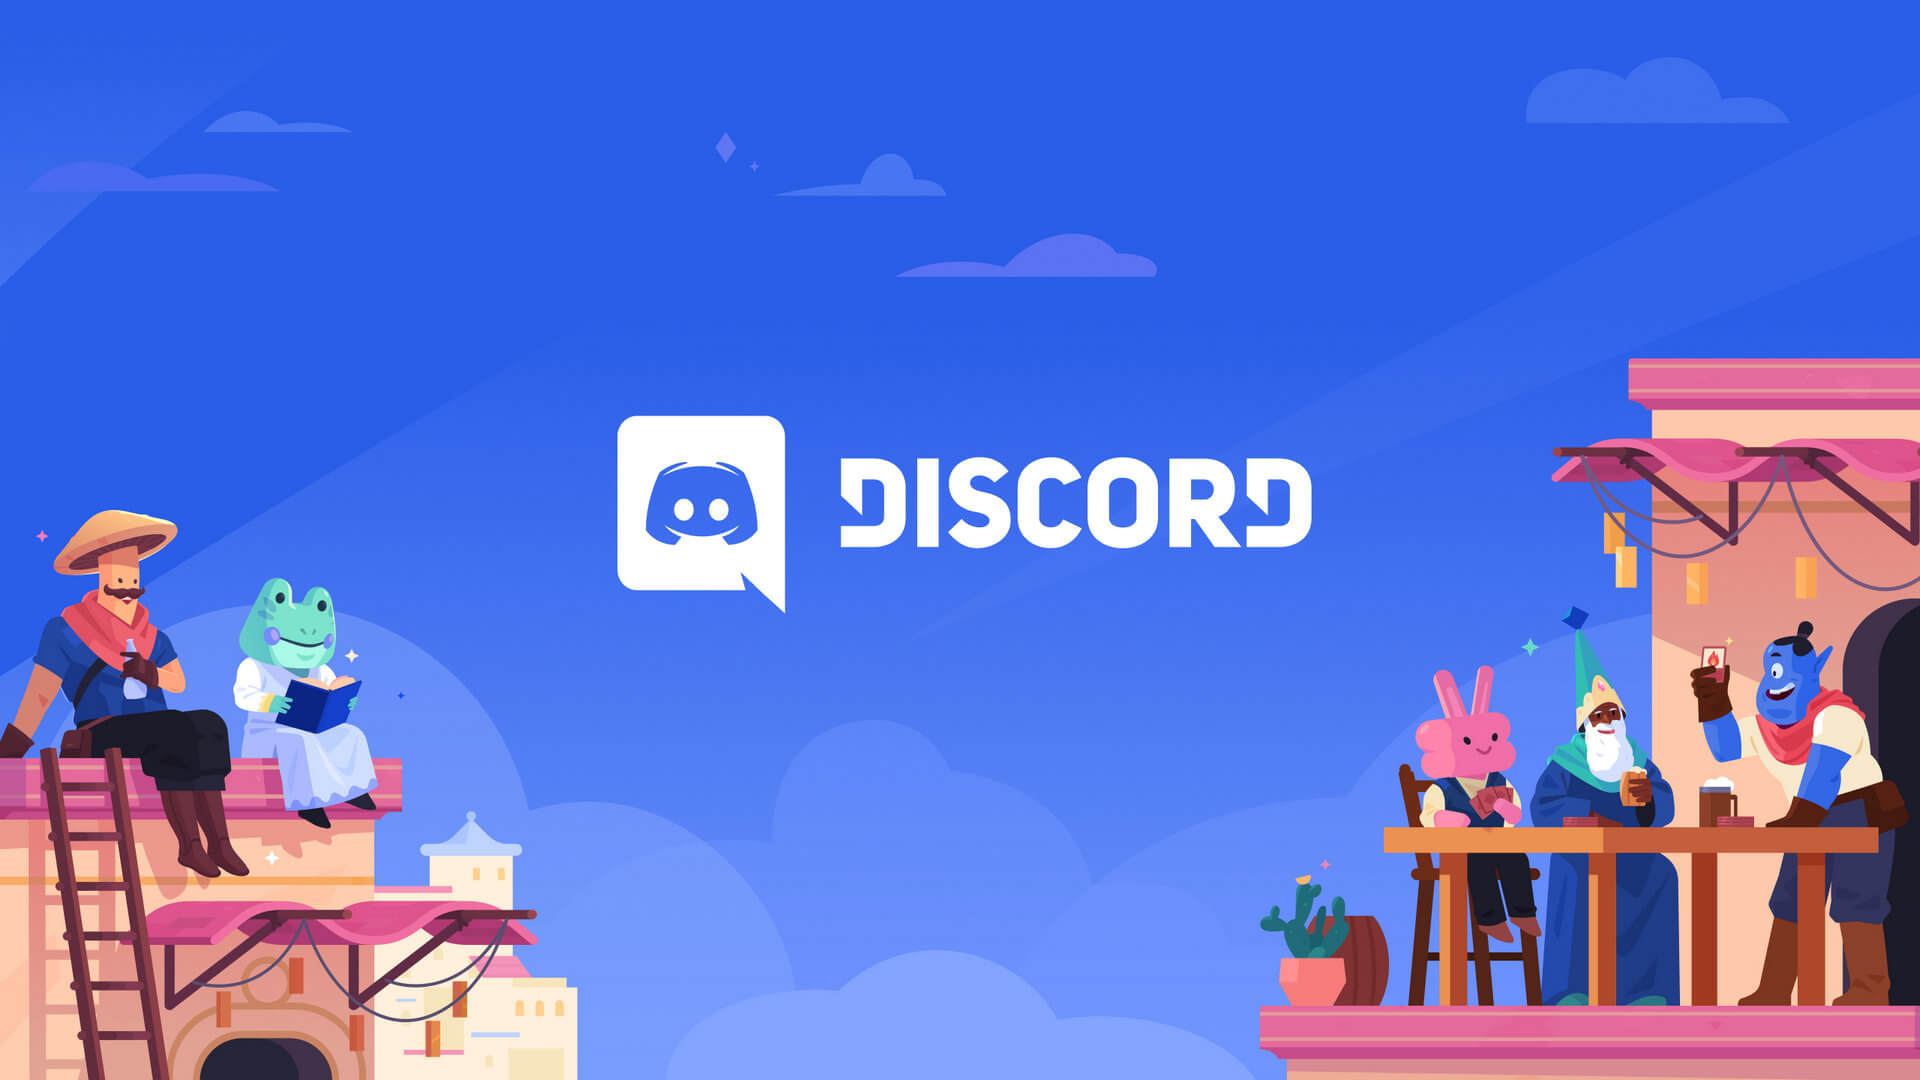 discord main page